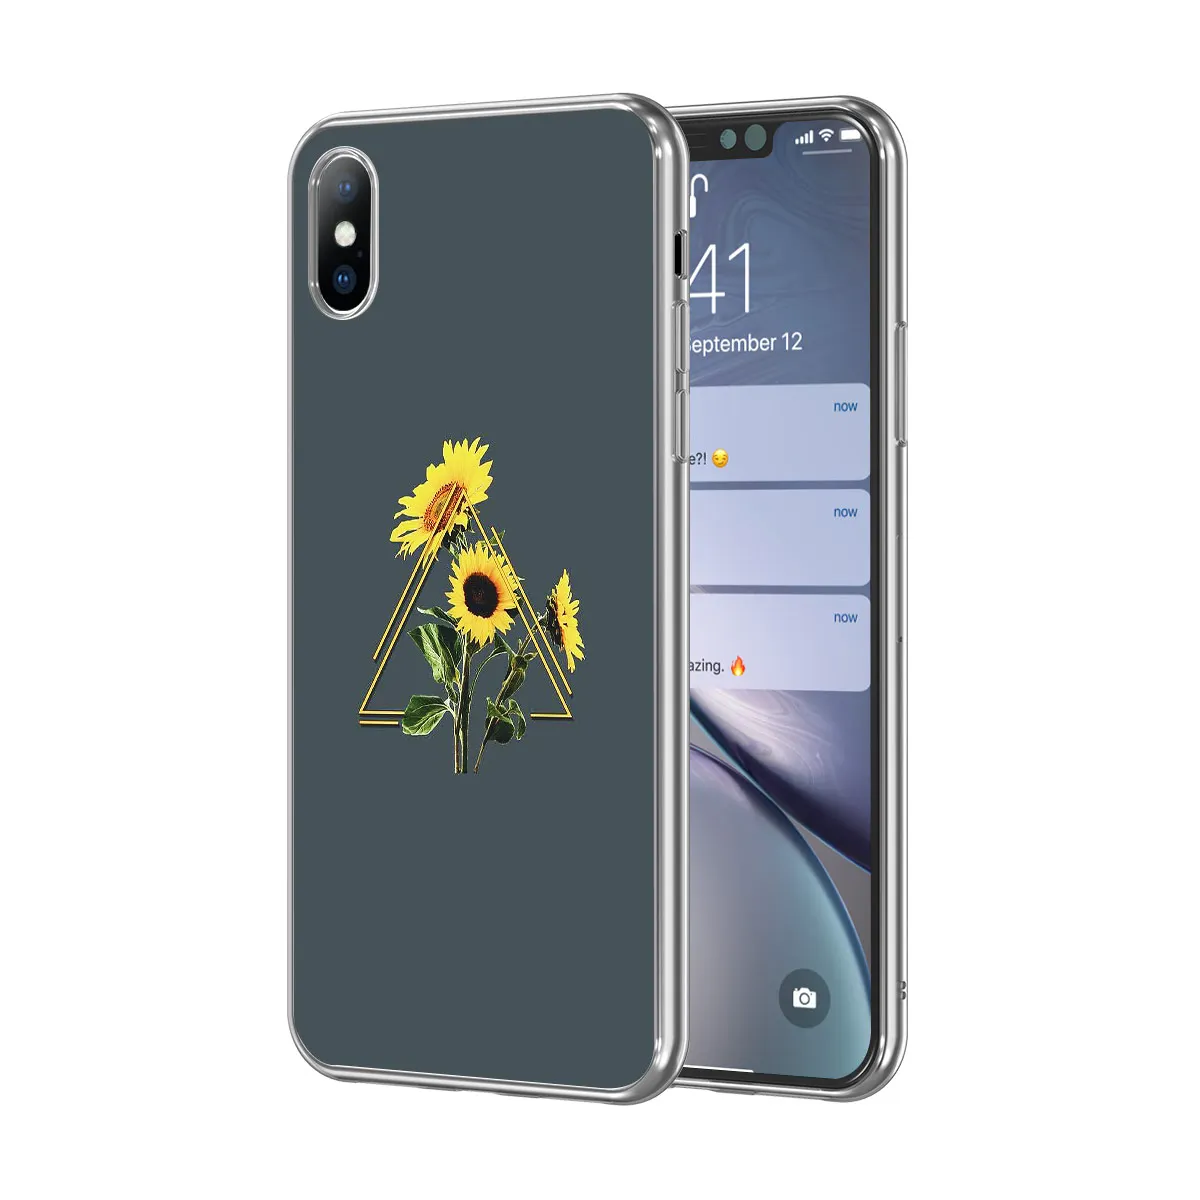 Чехол для телефона Ottwn Flowers для iPhone 11 7 8 6 6s Plus, мягкий чехол с цветными листьями розы для iPhone XS 11 Pro Max XR X 5 5S - Цвет: T11